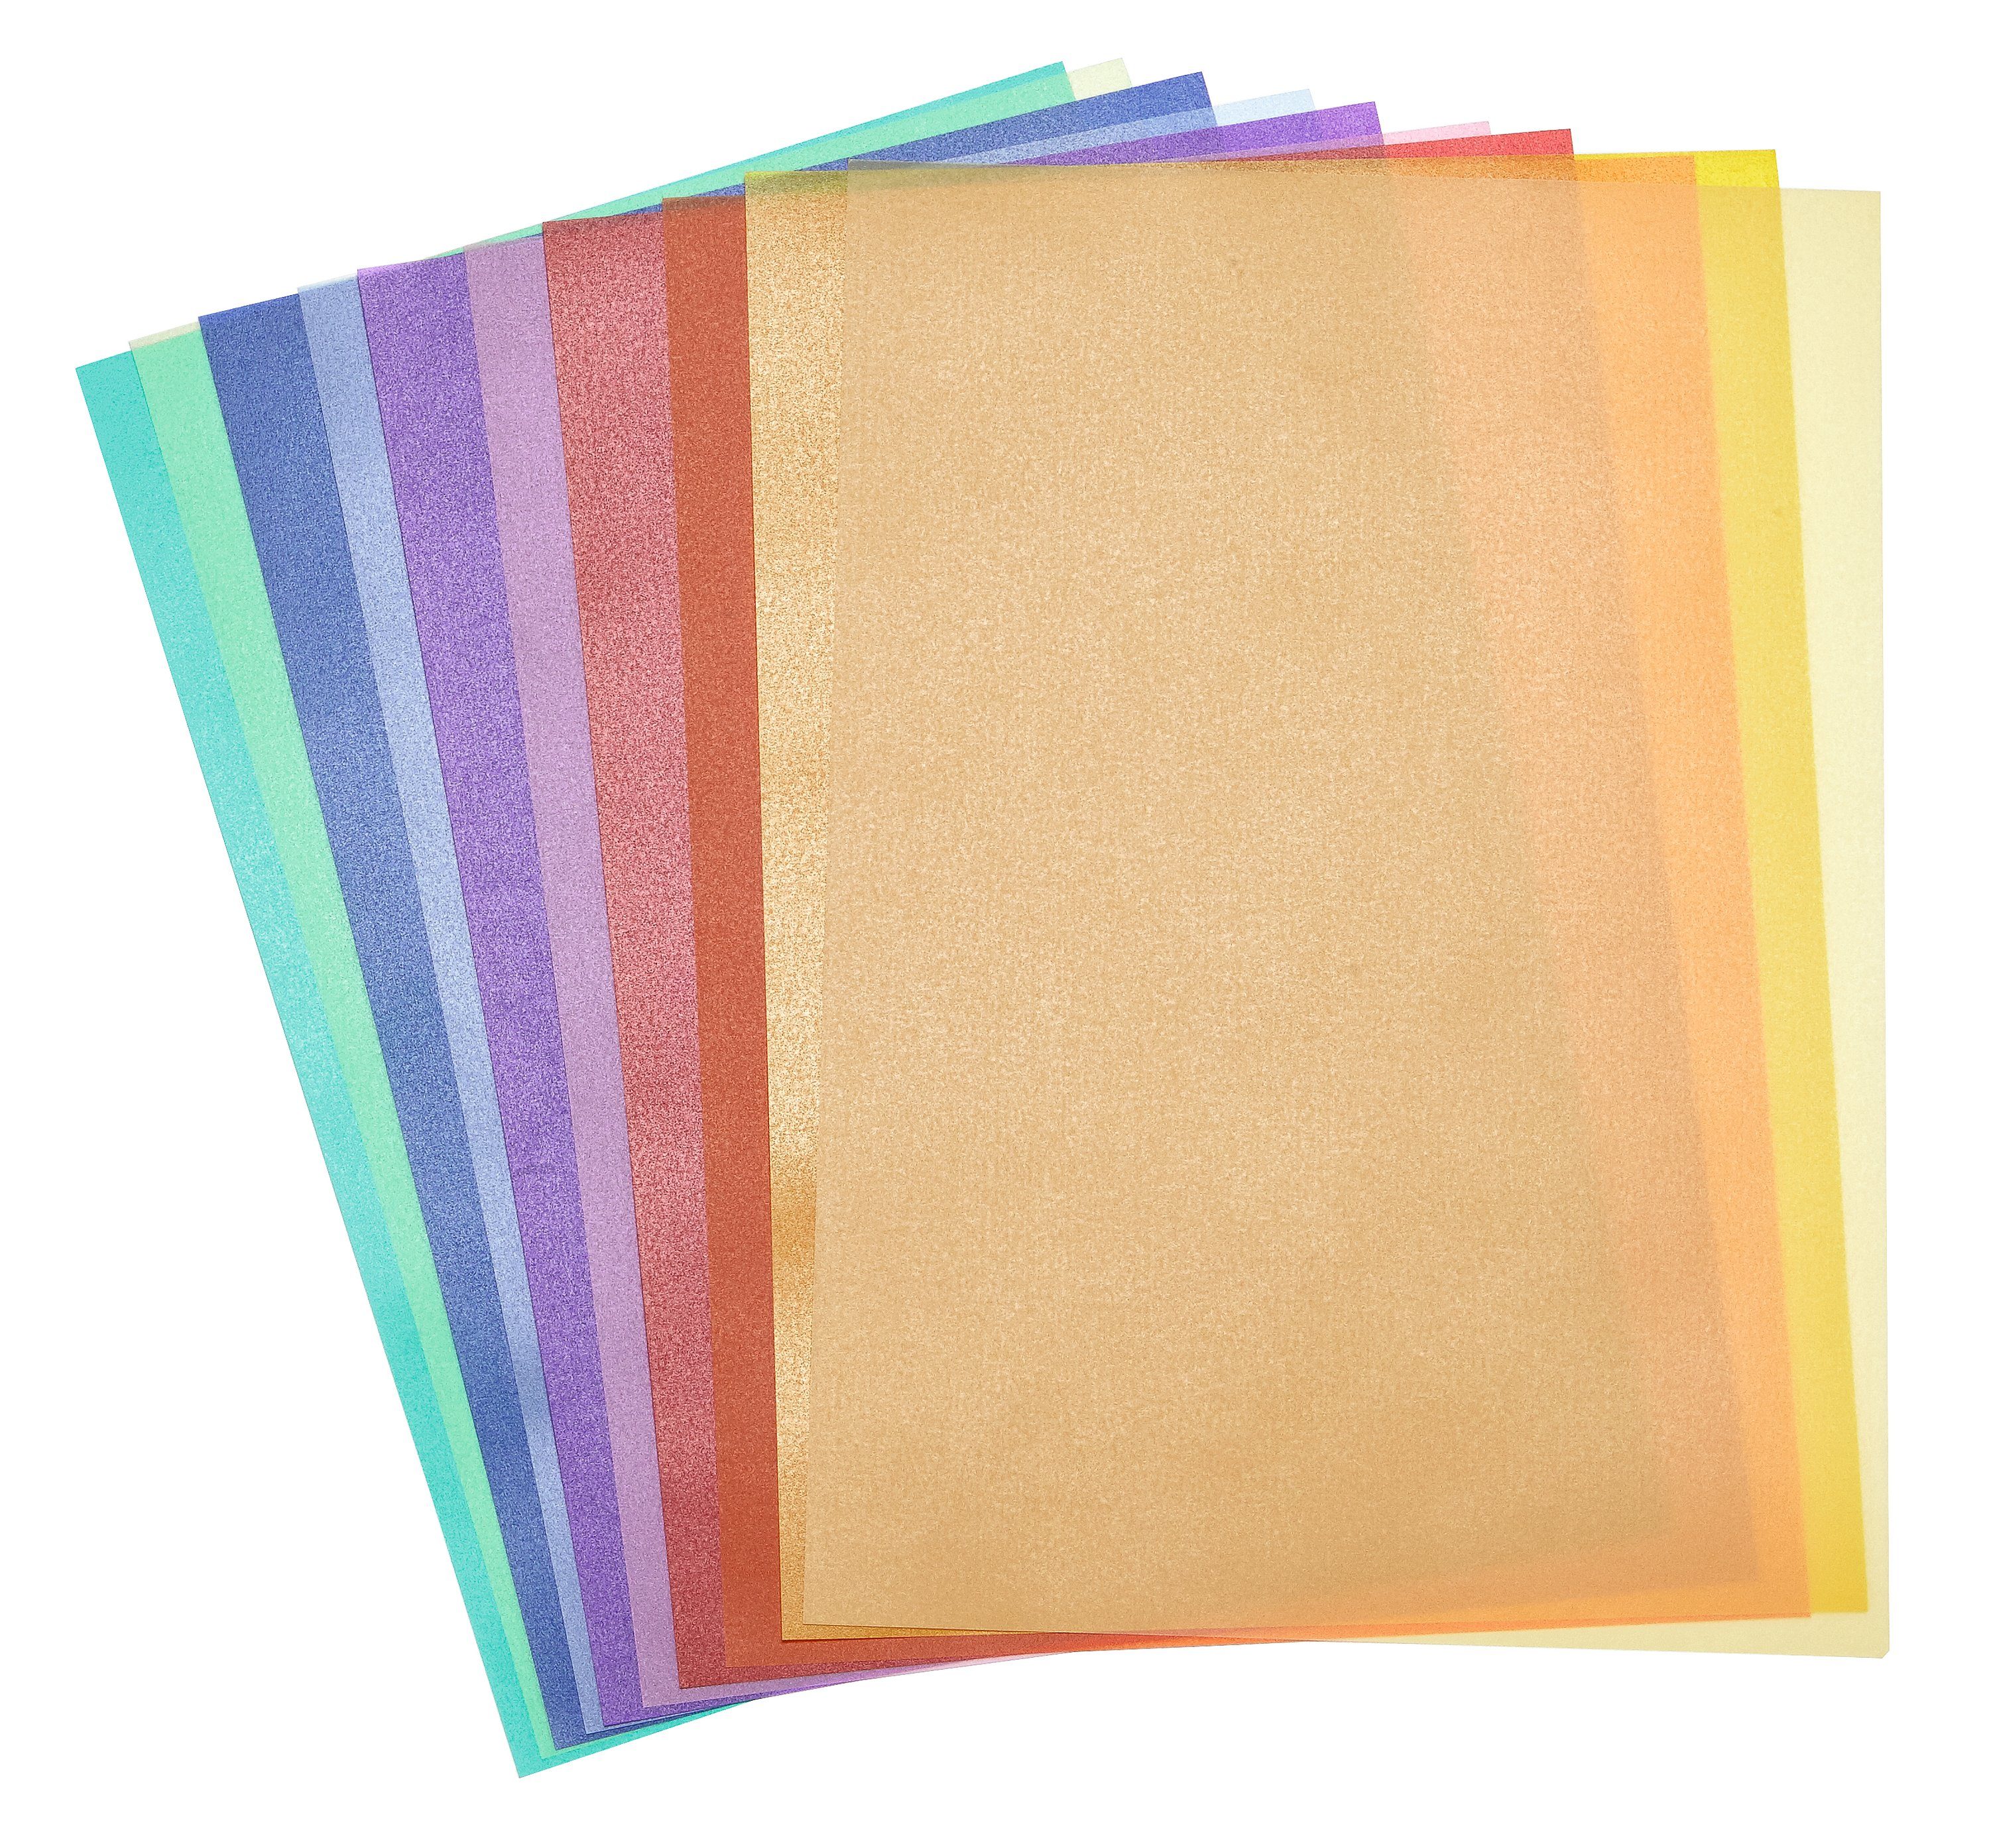 | 10 Transparentpapier Bunt Transparentpapier, Blatt Multi Folia